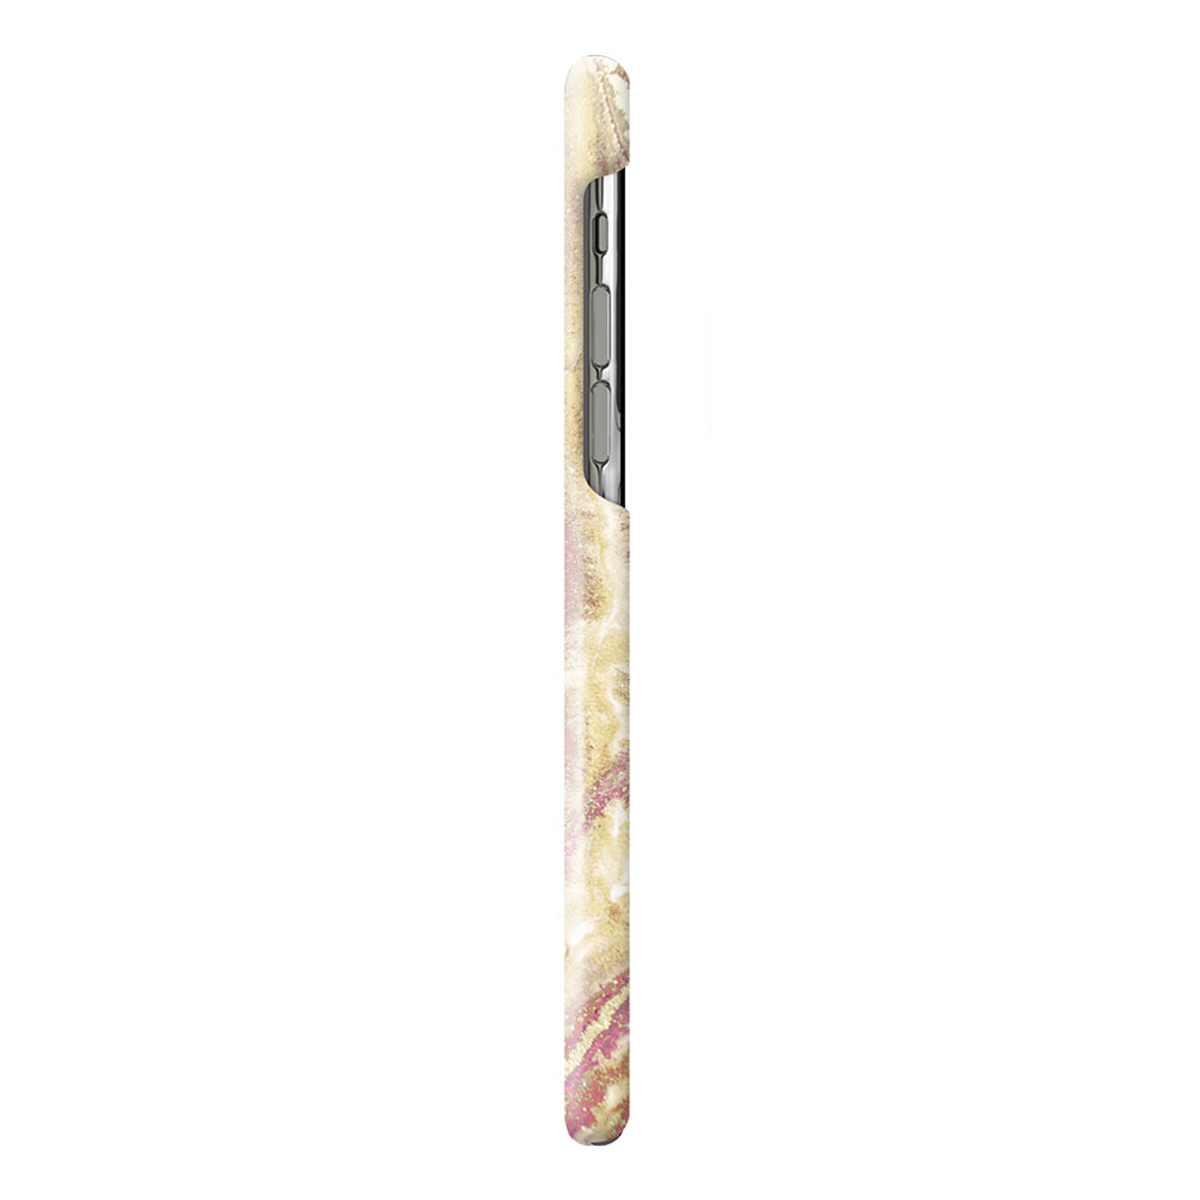 iDeal Fashion Case magnetskal iPhone X/XS, Golden Blush Marble